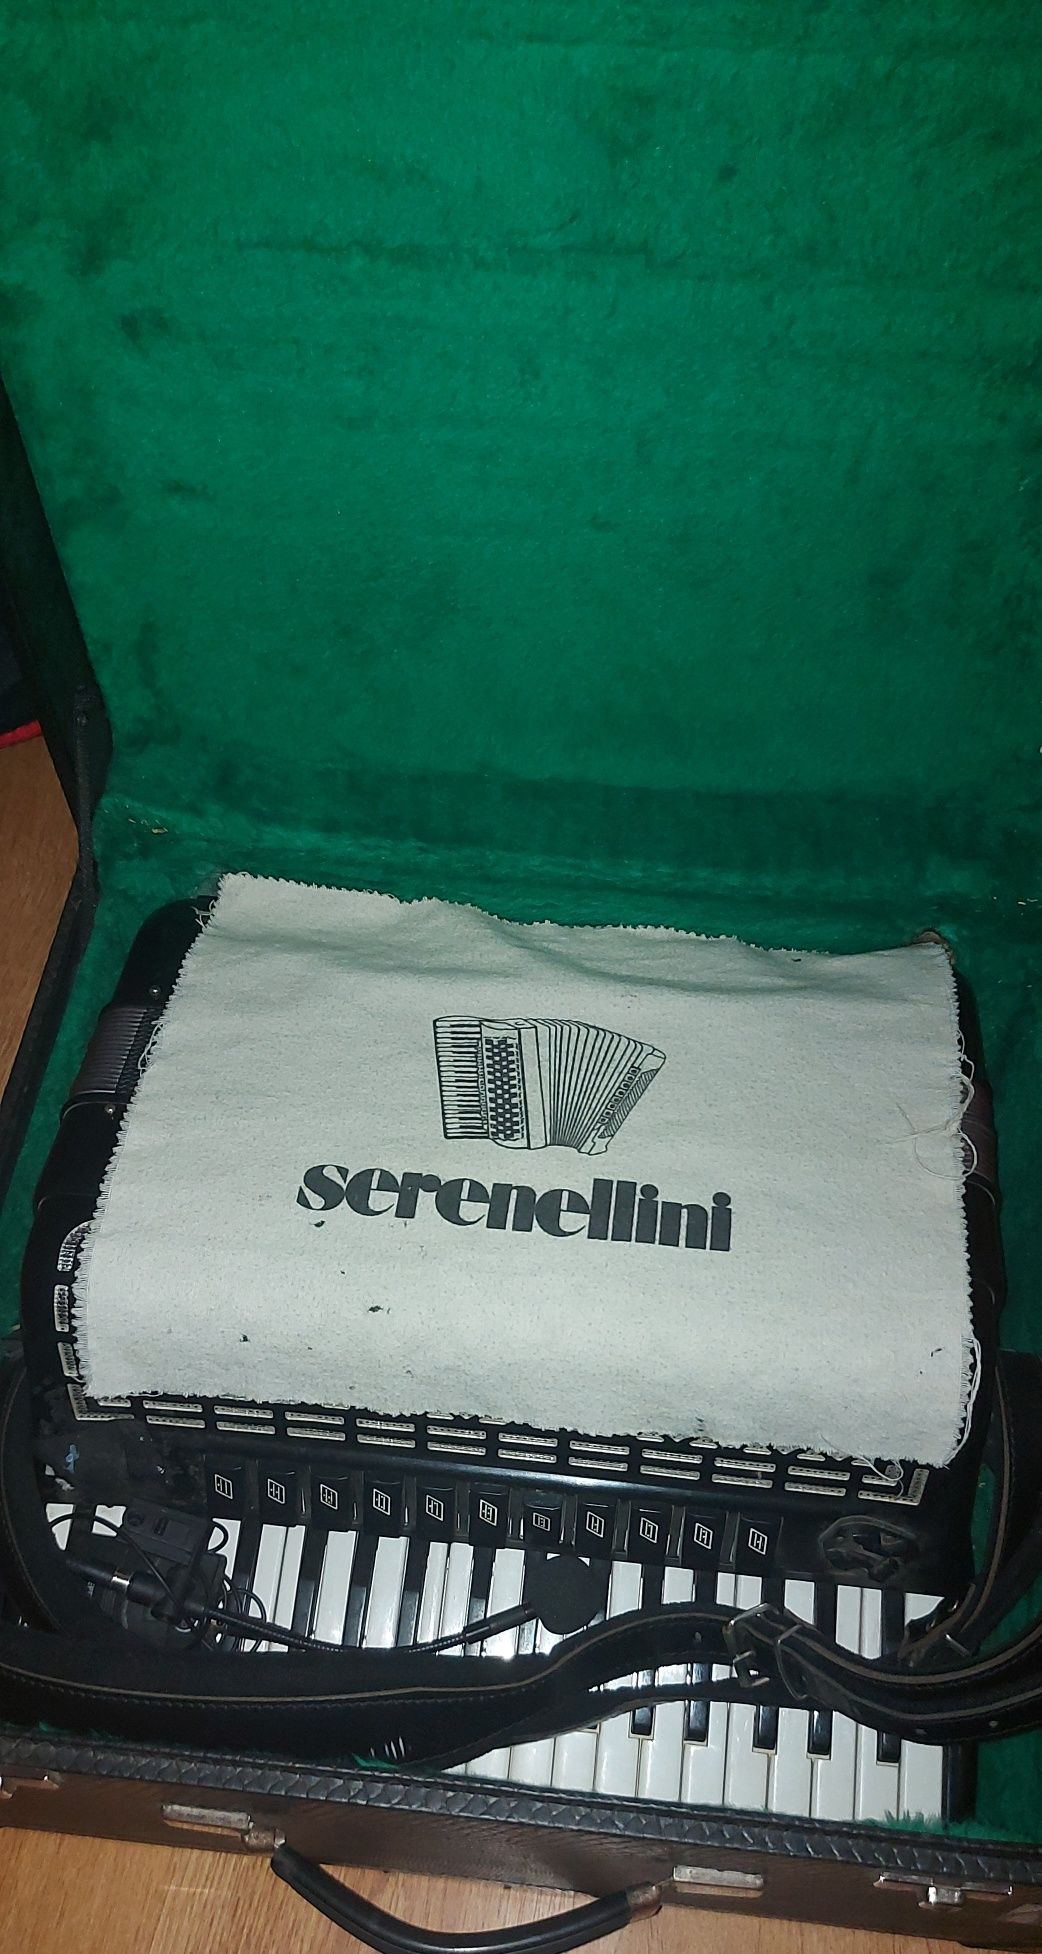 Acordiao Serenellini